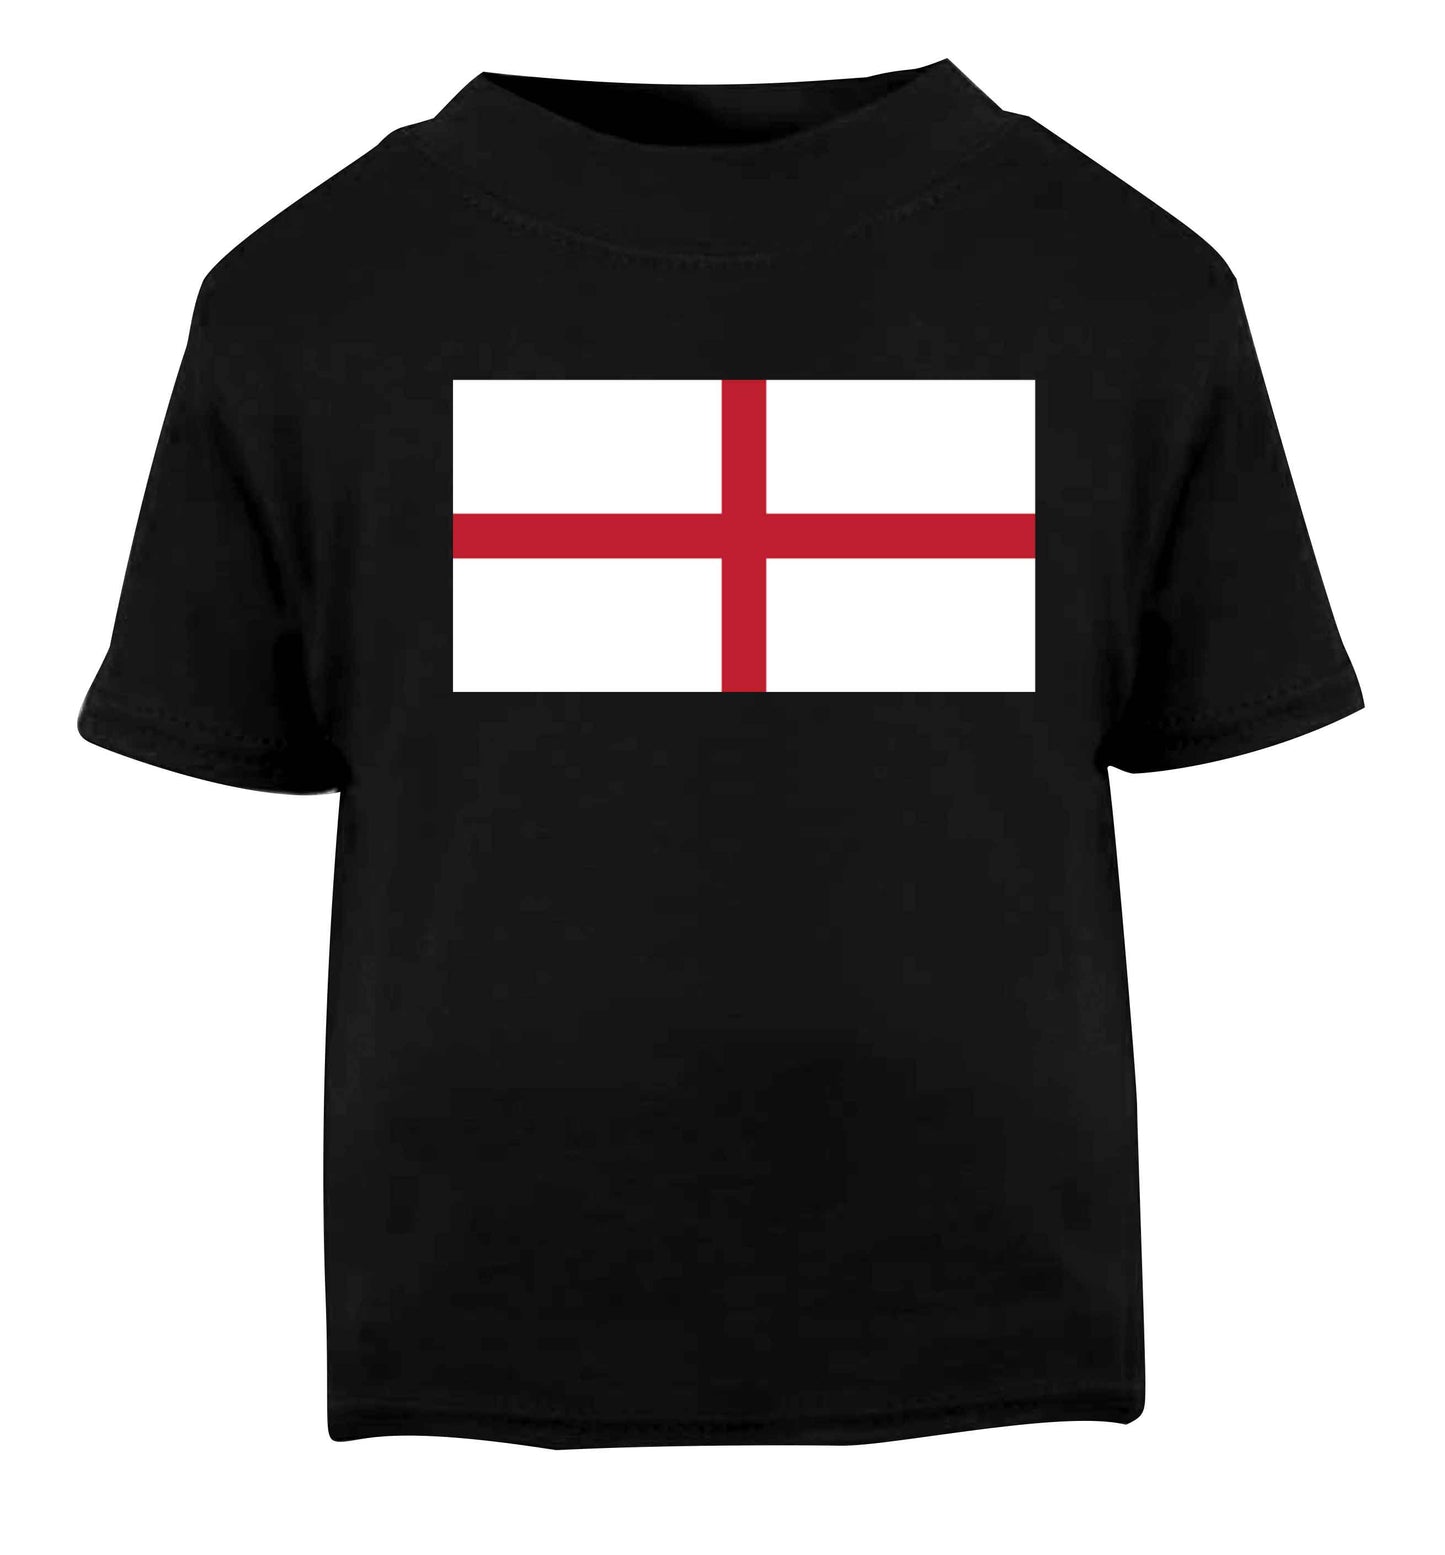 England Flag Black baby toddler Tshirt 2 years